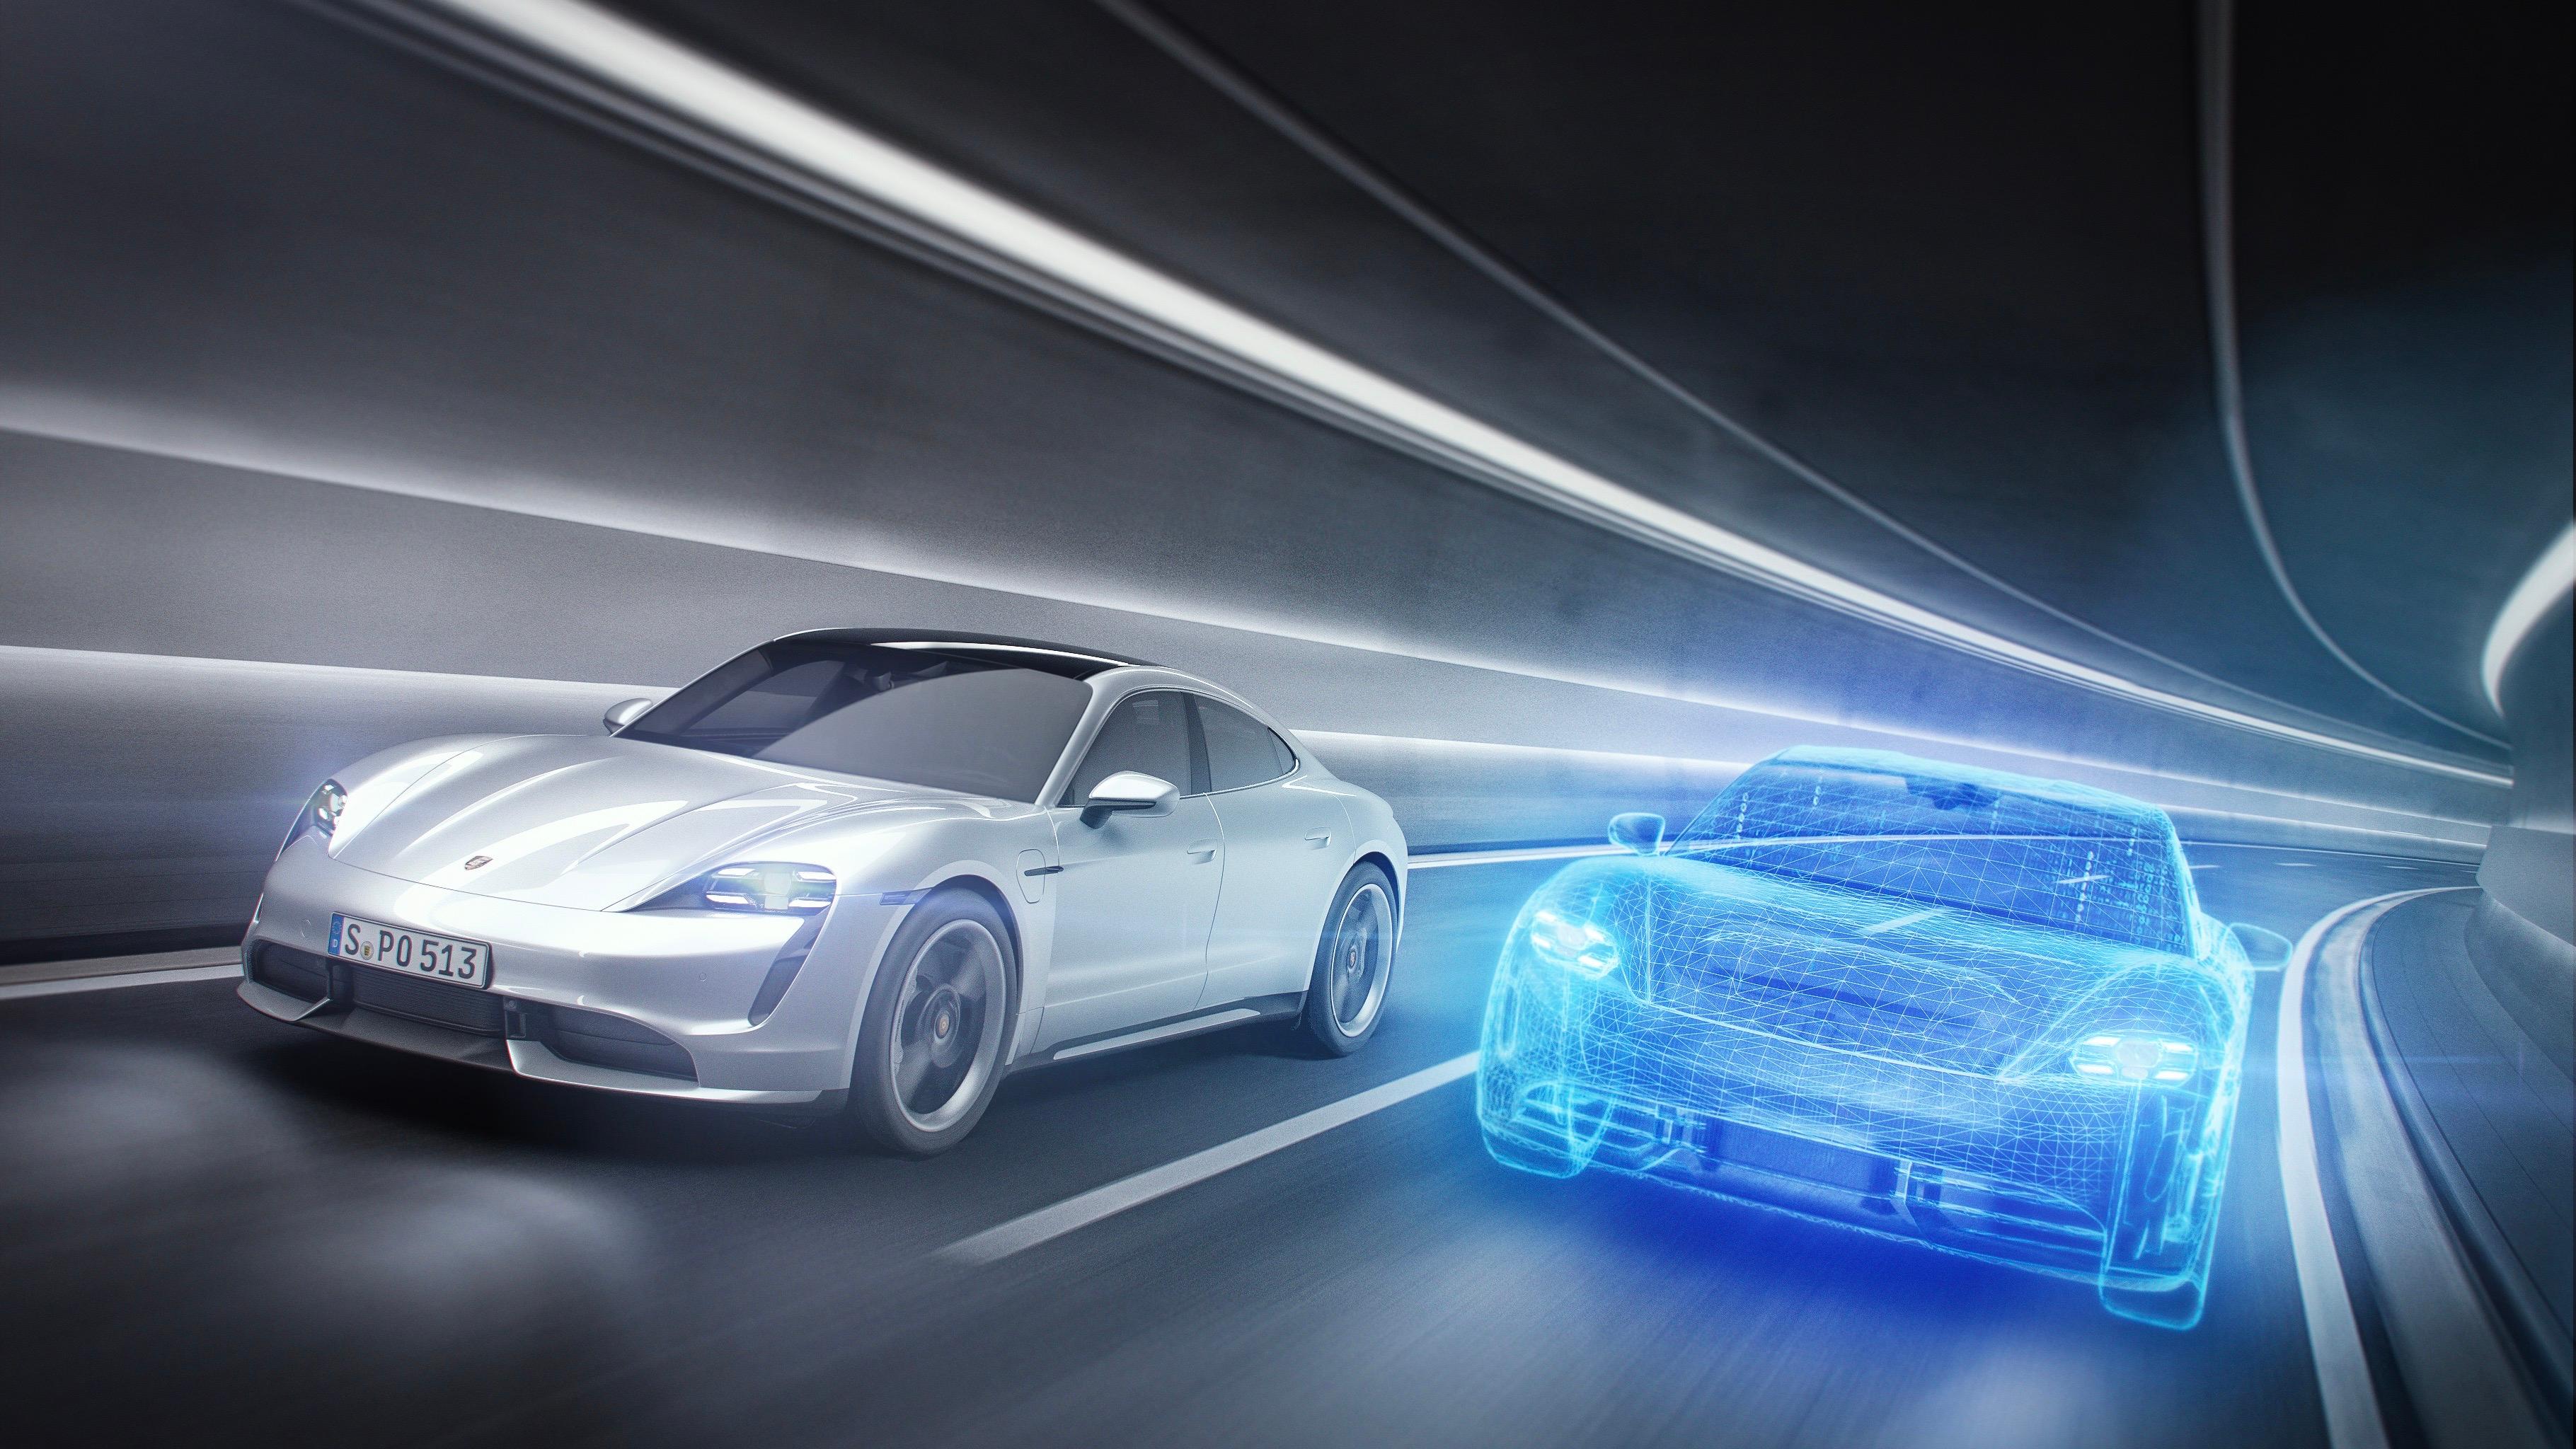  A Porsche digital twin helps predict potential car issues.